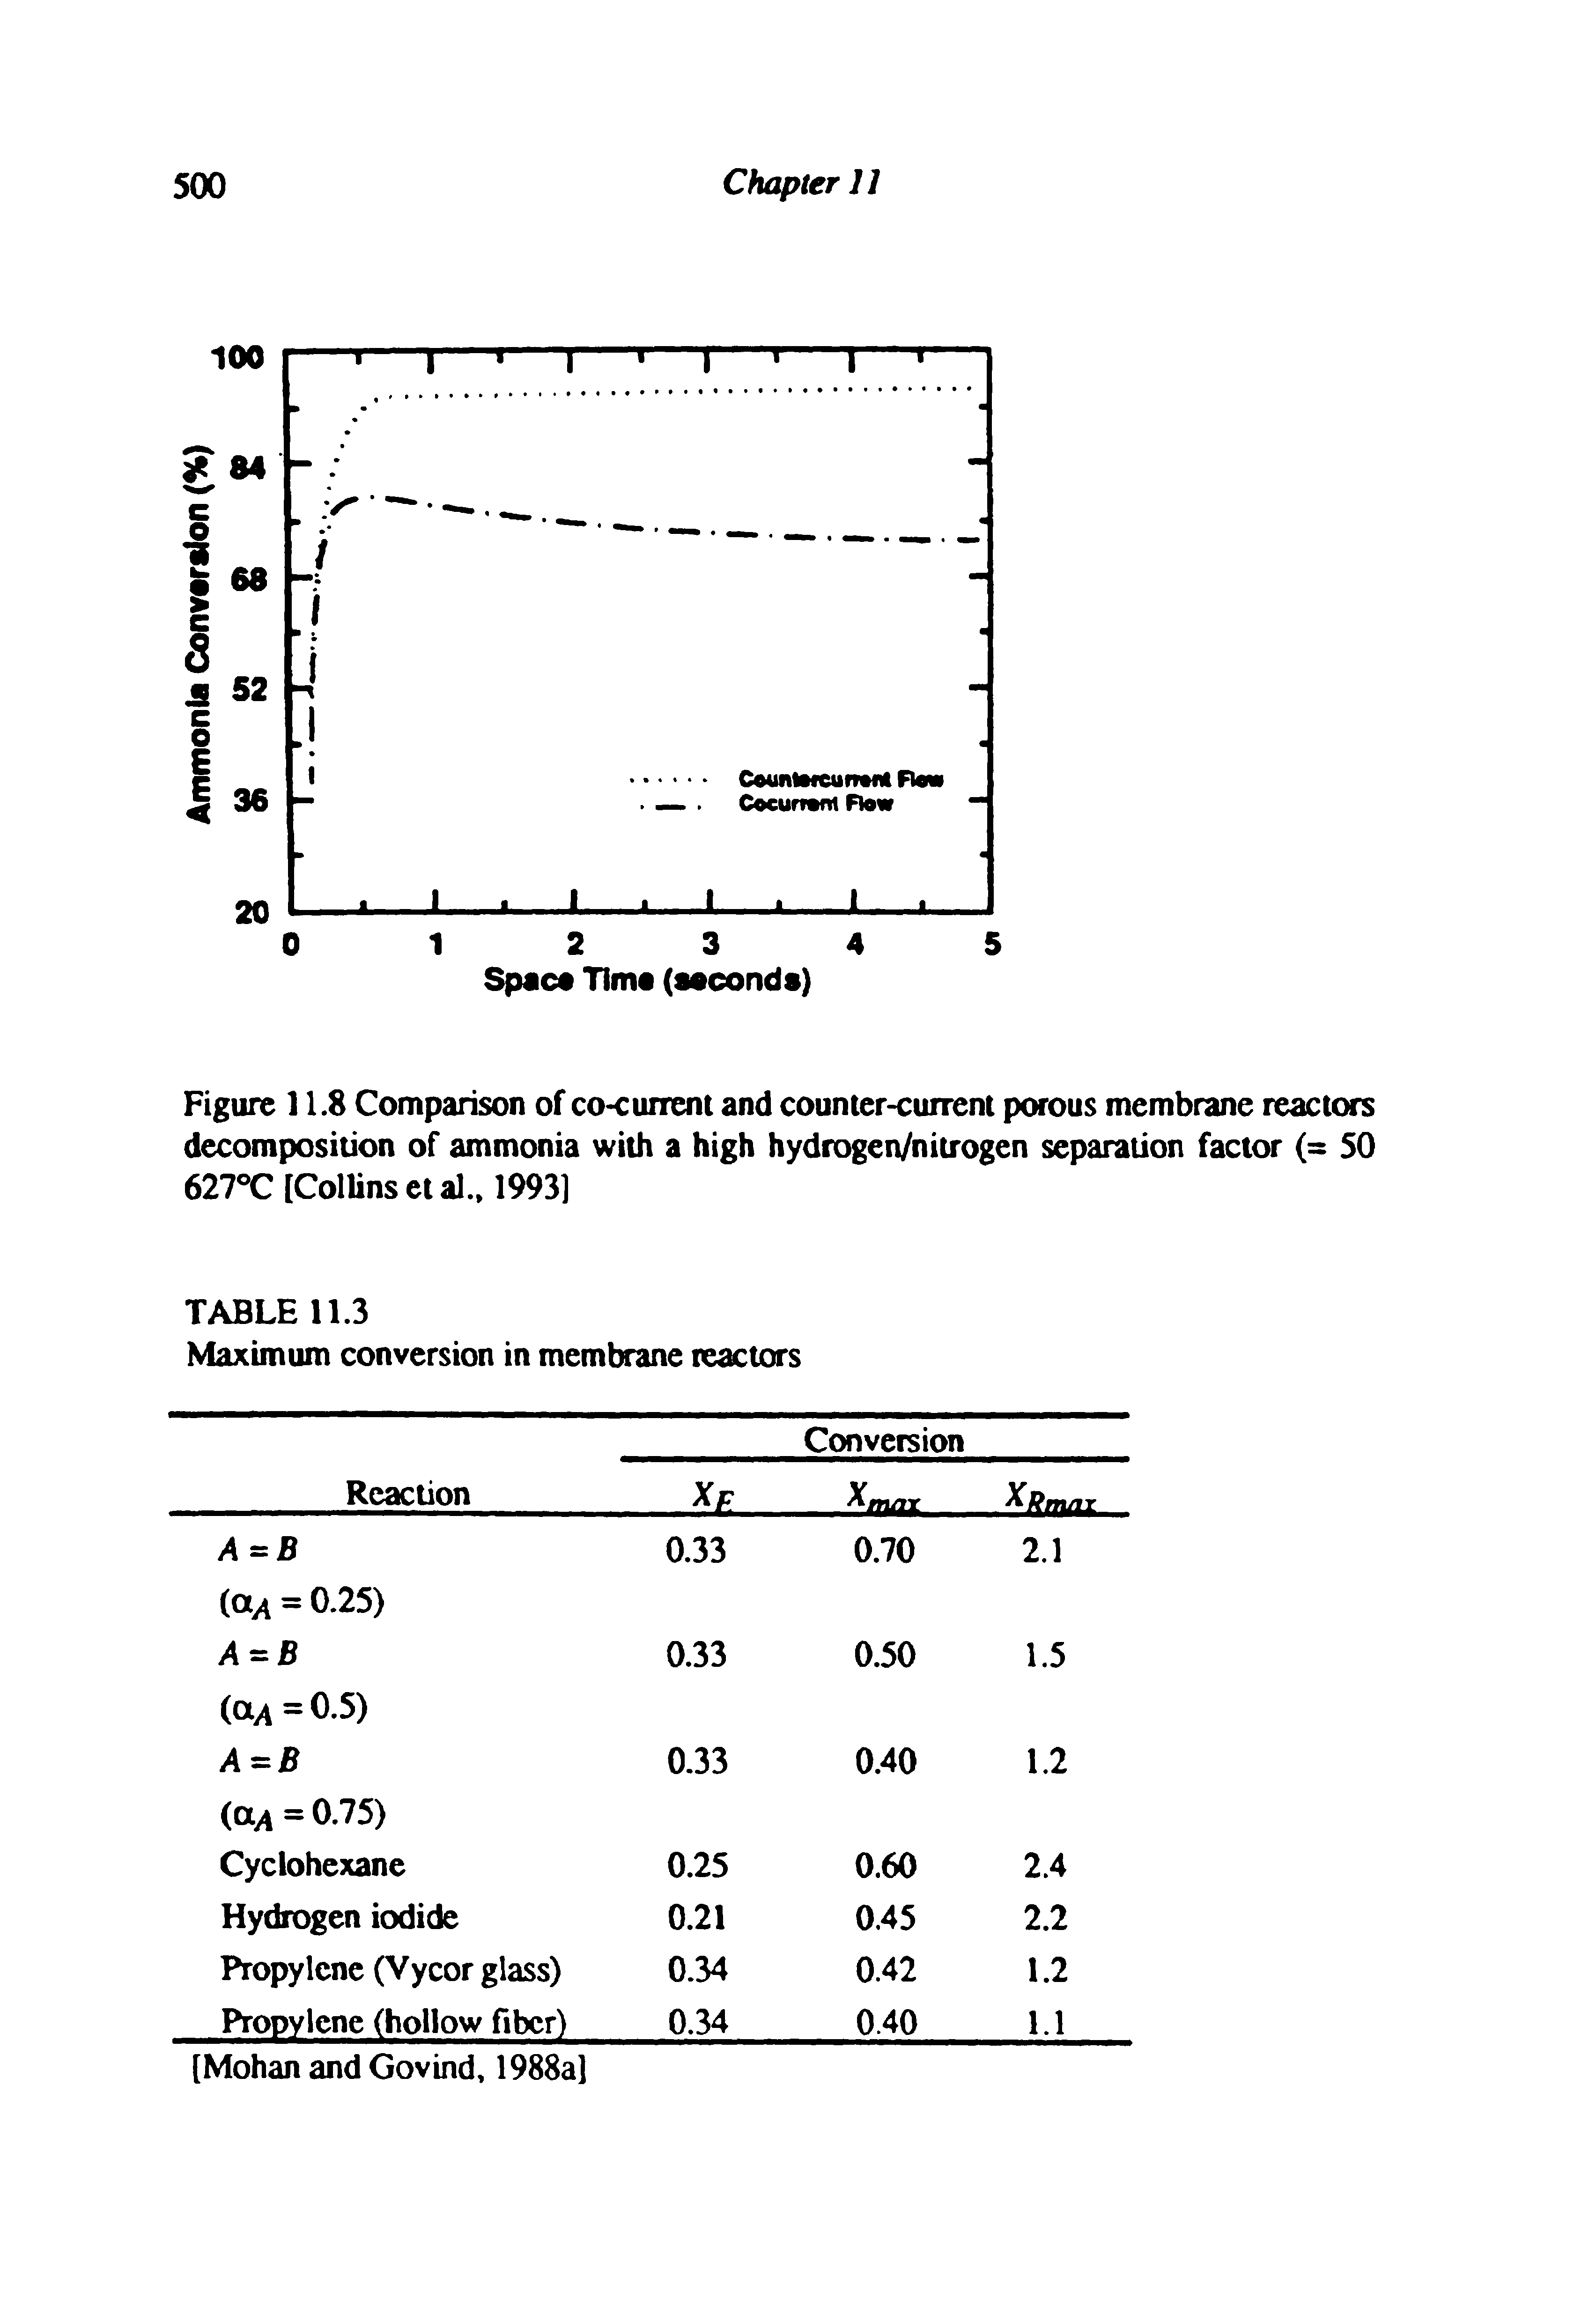 Figure 11.8 Comparison of co-current and counter-current porous membrane reactors decomposition of ammonia with a high hydrogen/nitrogen separation factor (= 50 627 C[ColUns etal., 1993)...